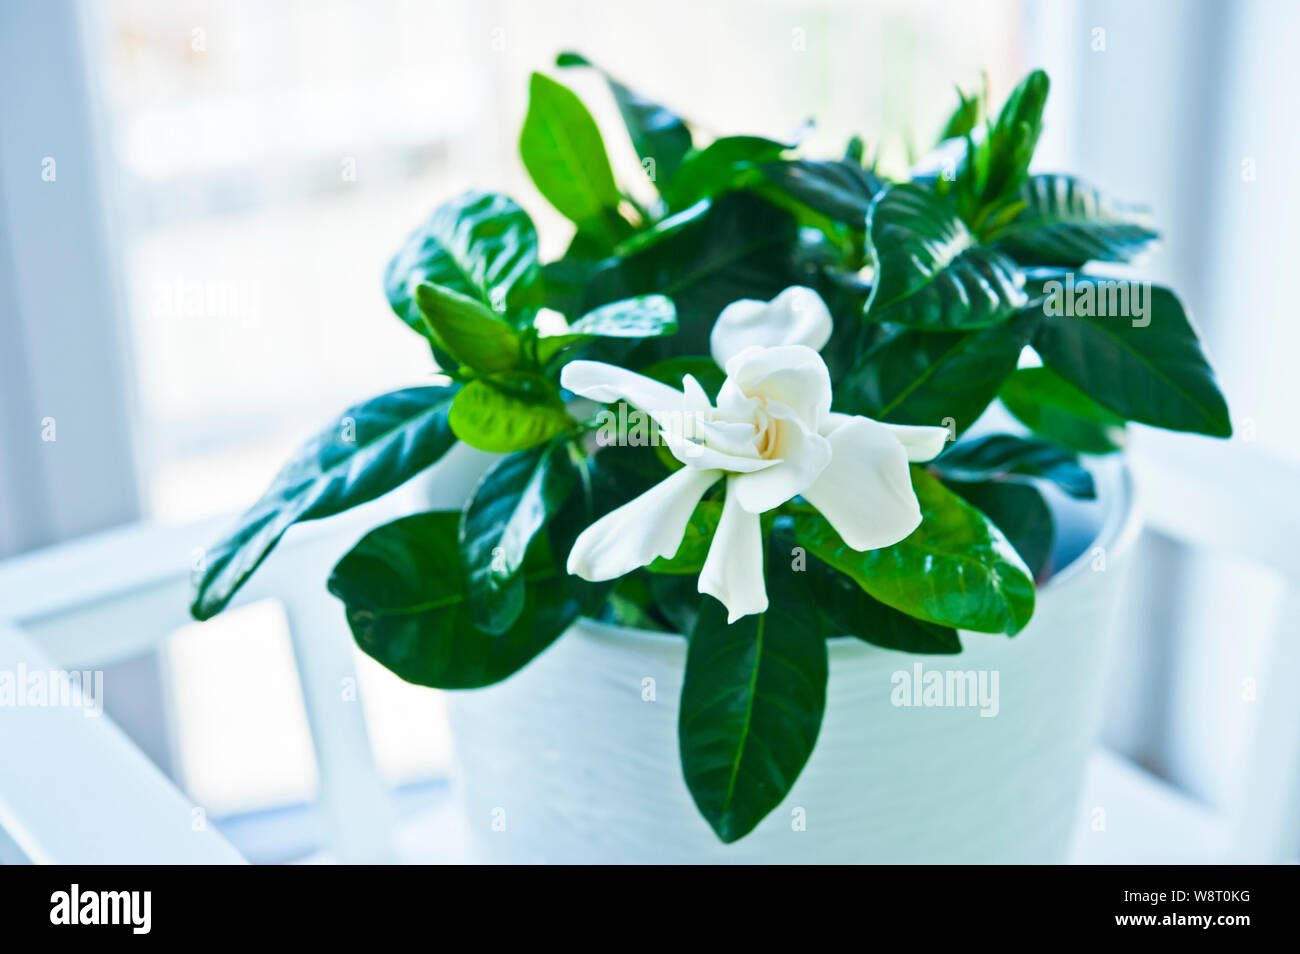 Gardenia Jasminoides flowering plant in vase with white flowers blooming Stock Photo